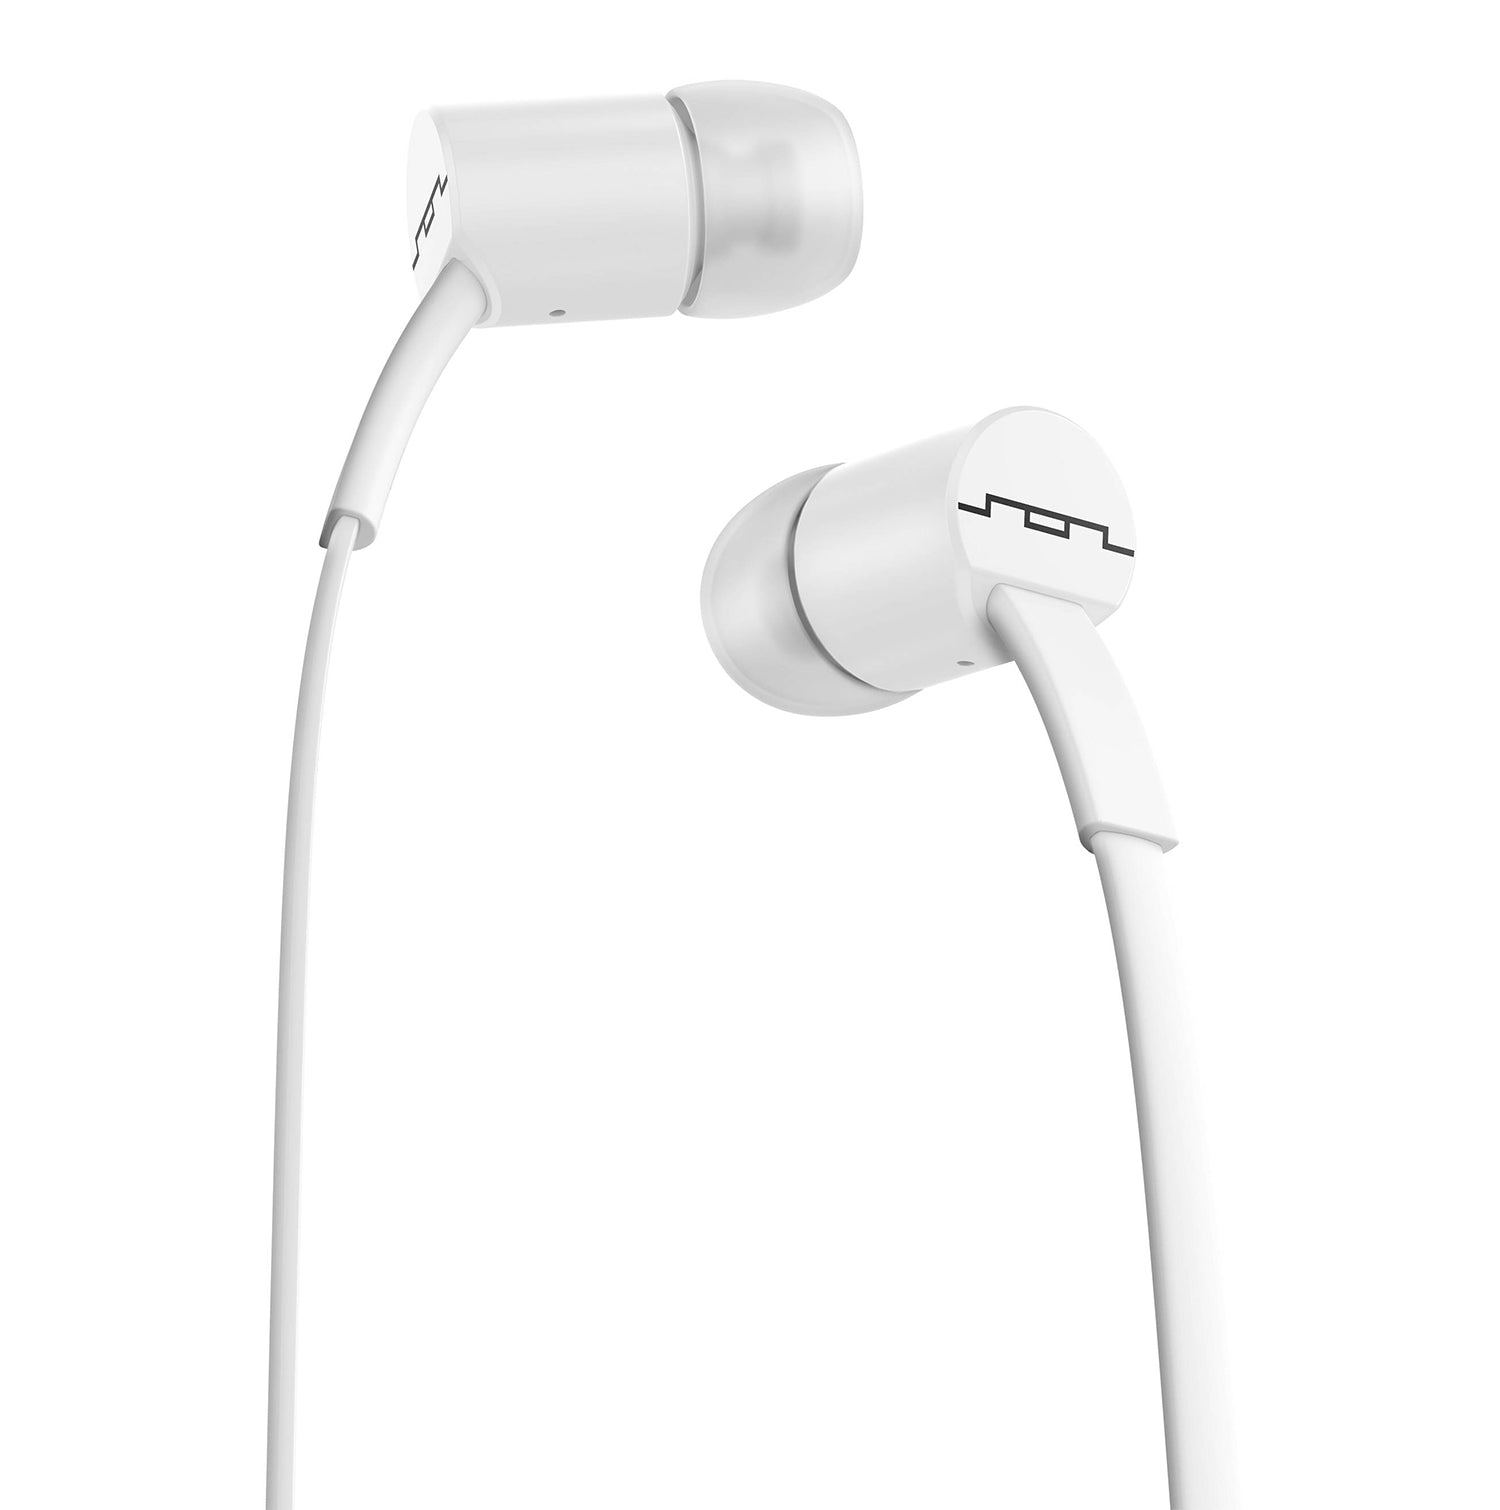 SOL REPUBLIC 1112-32 Jax In-Ear Headphones - Paper White - Hollywood DJ